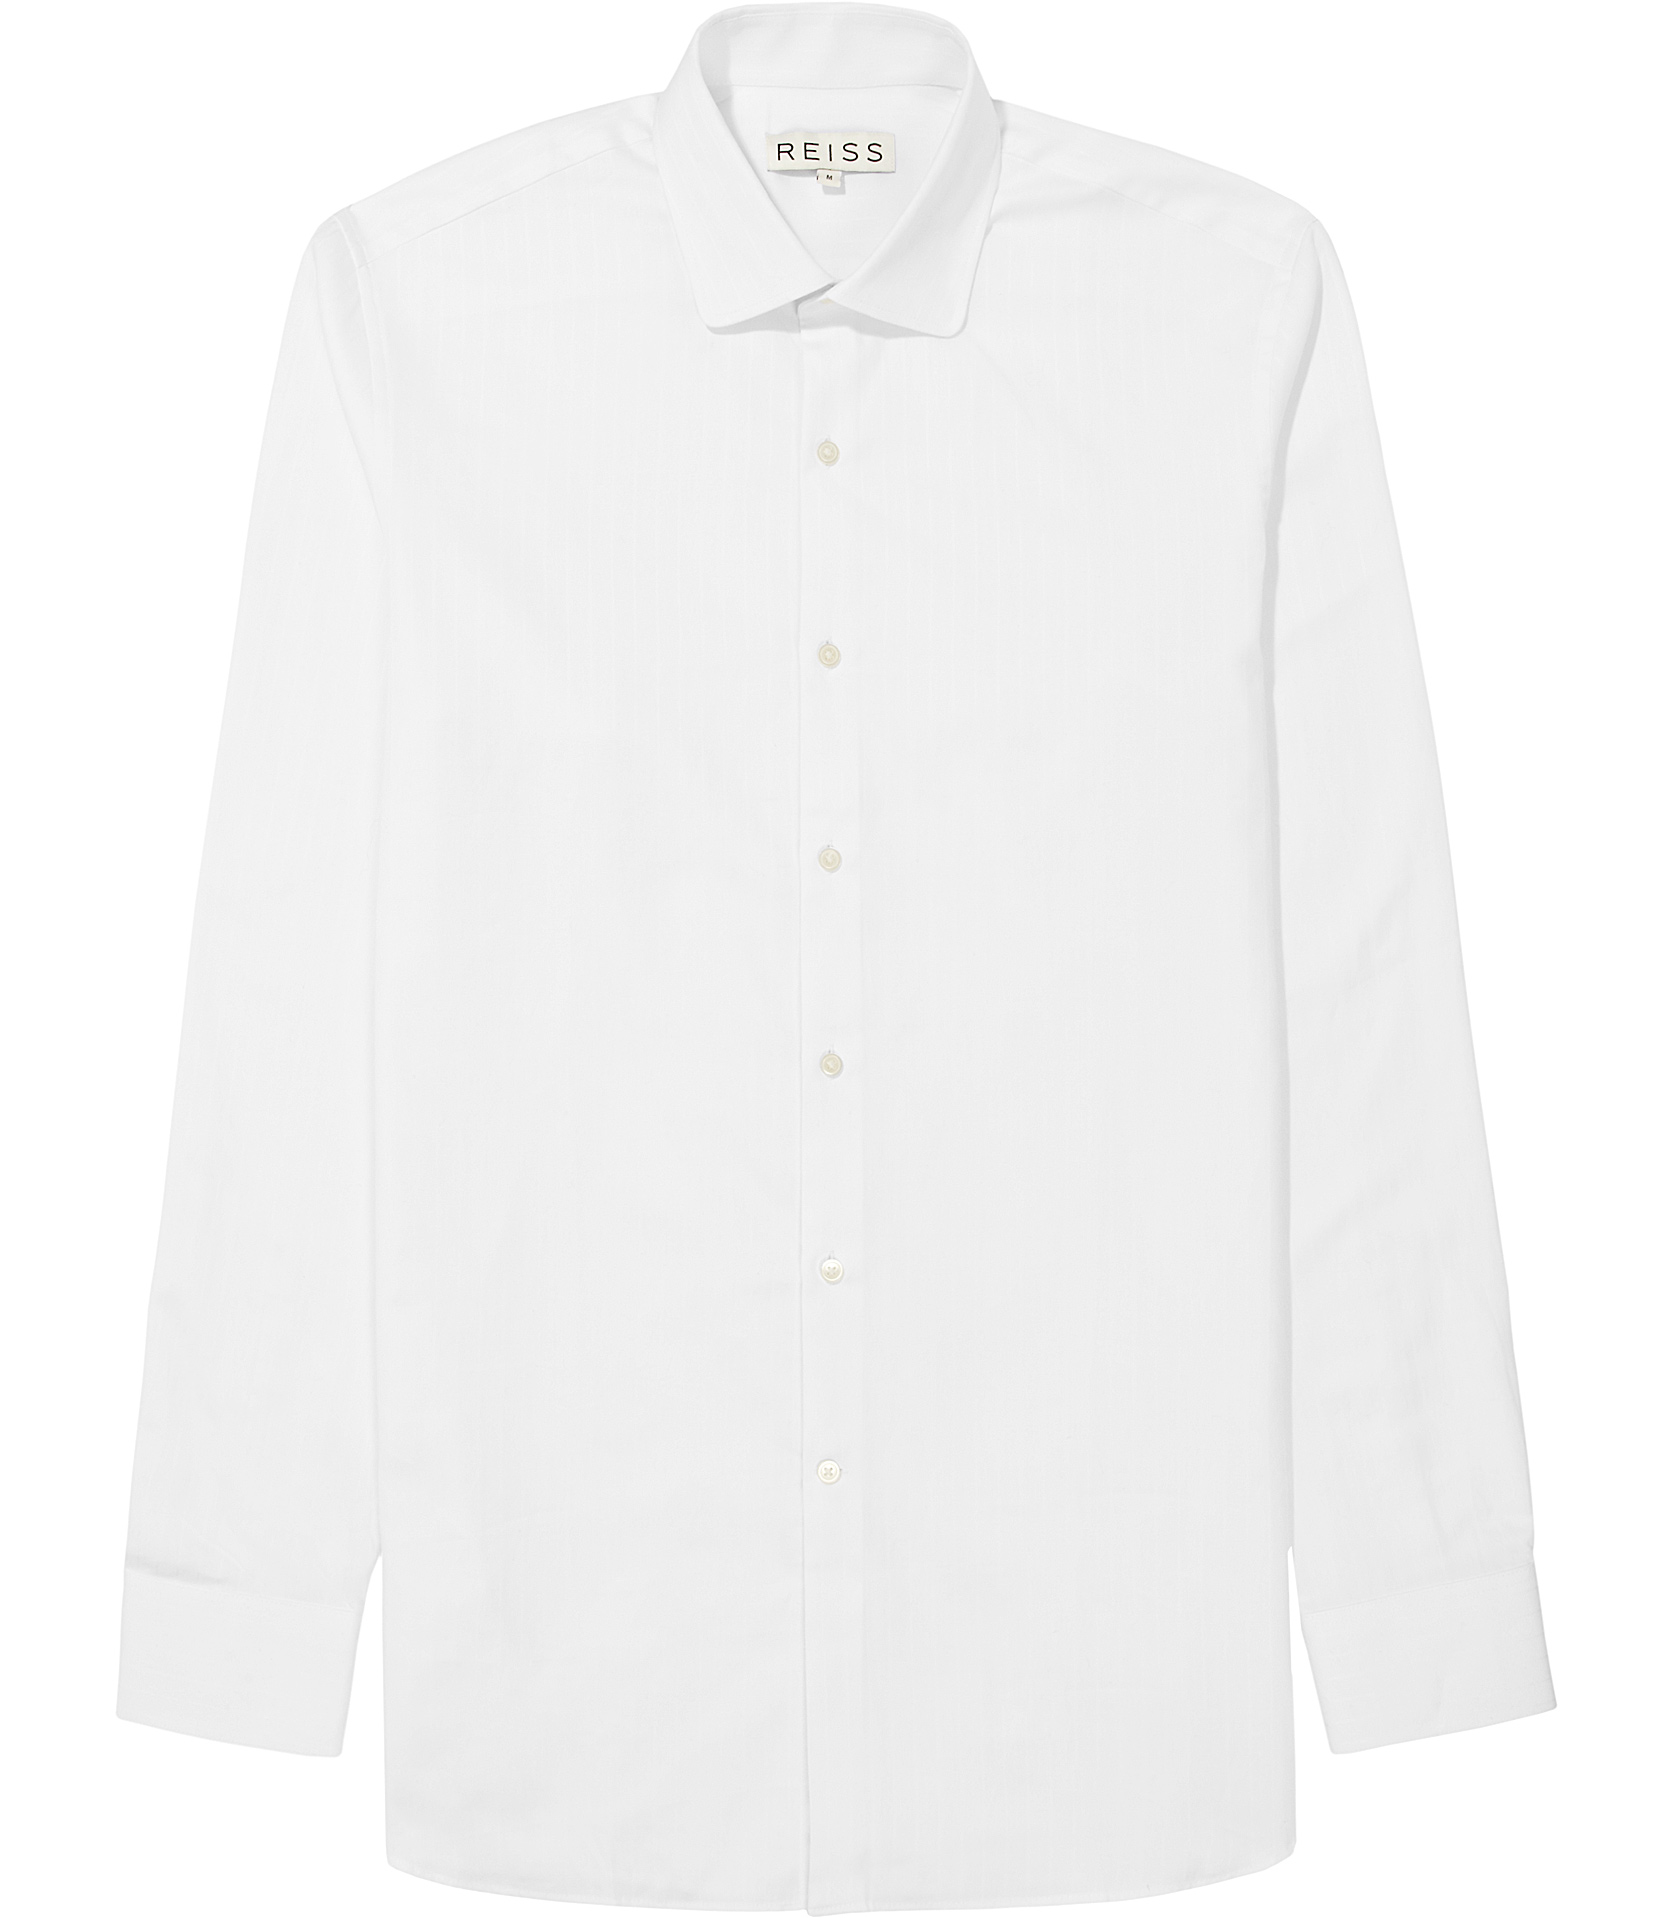 Lyst - Reiss Nevis Micro Pattern Shirt in White for Men